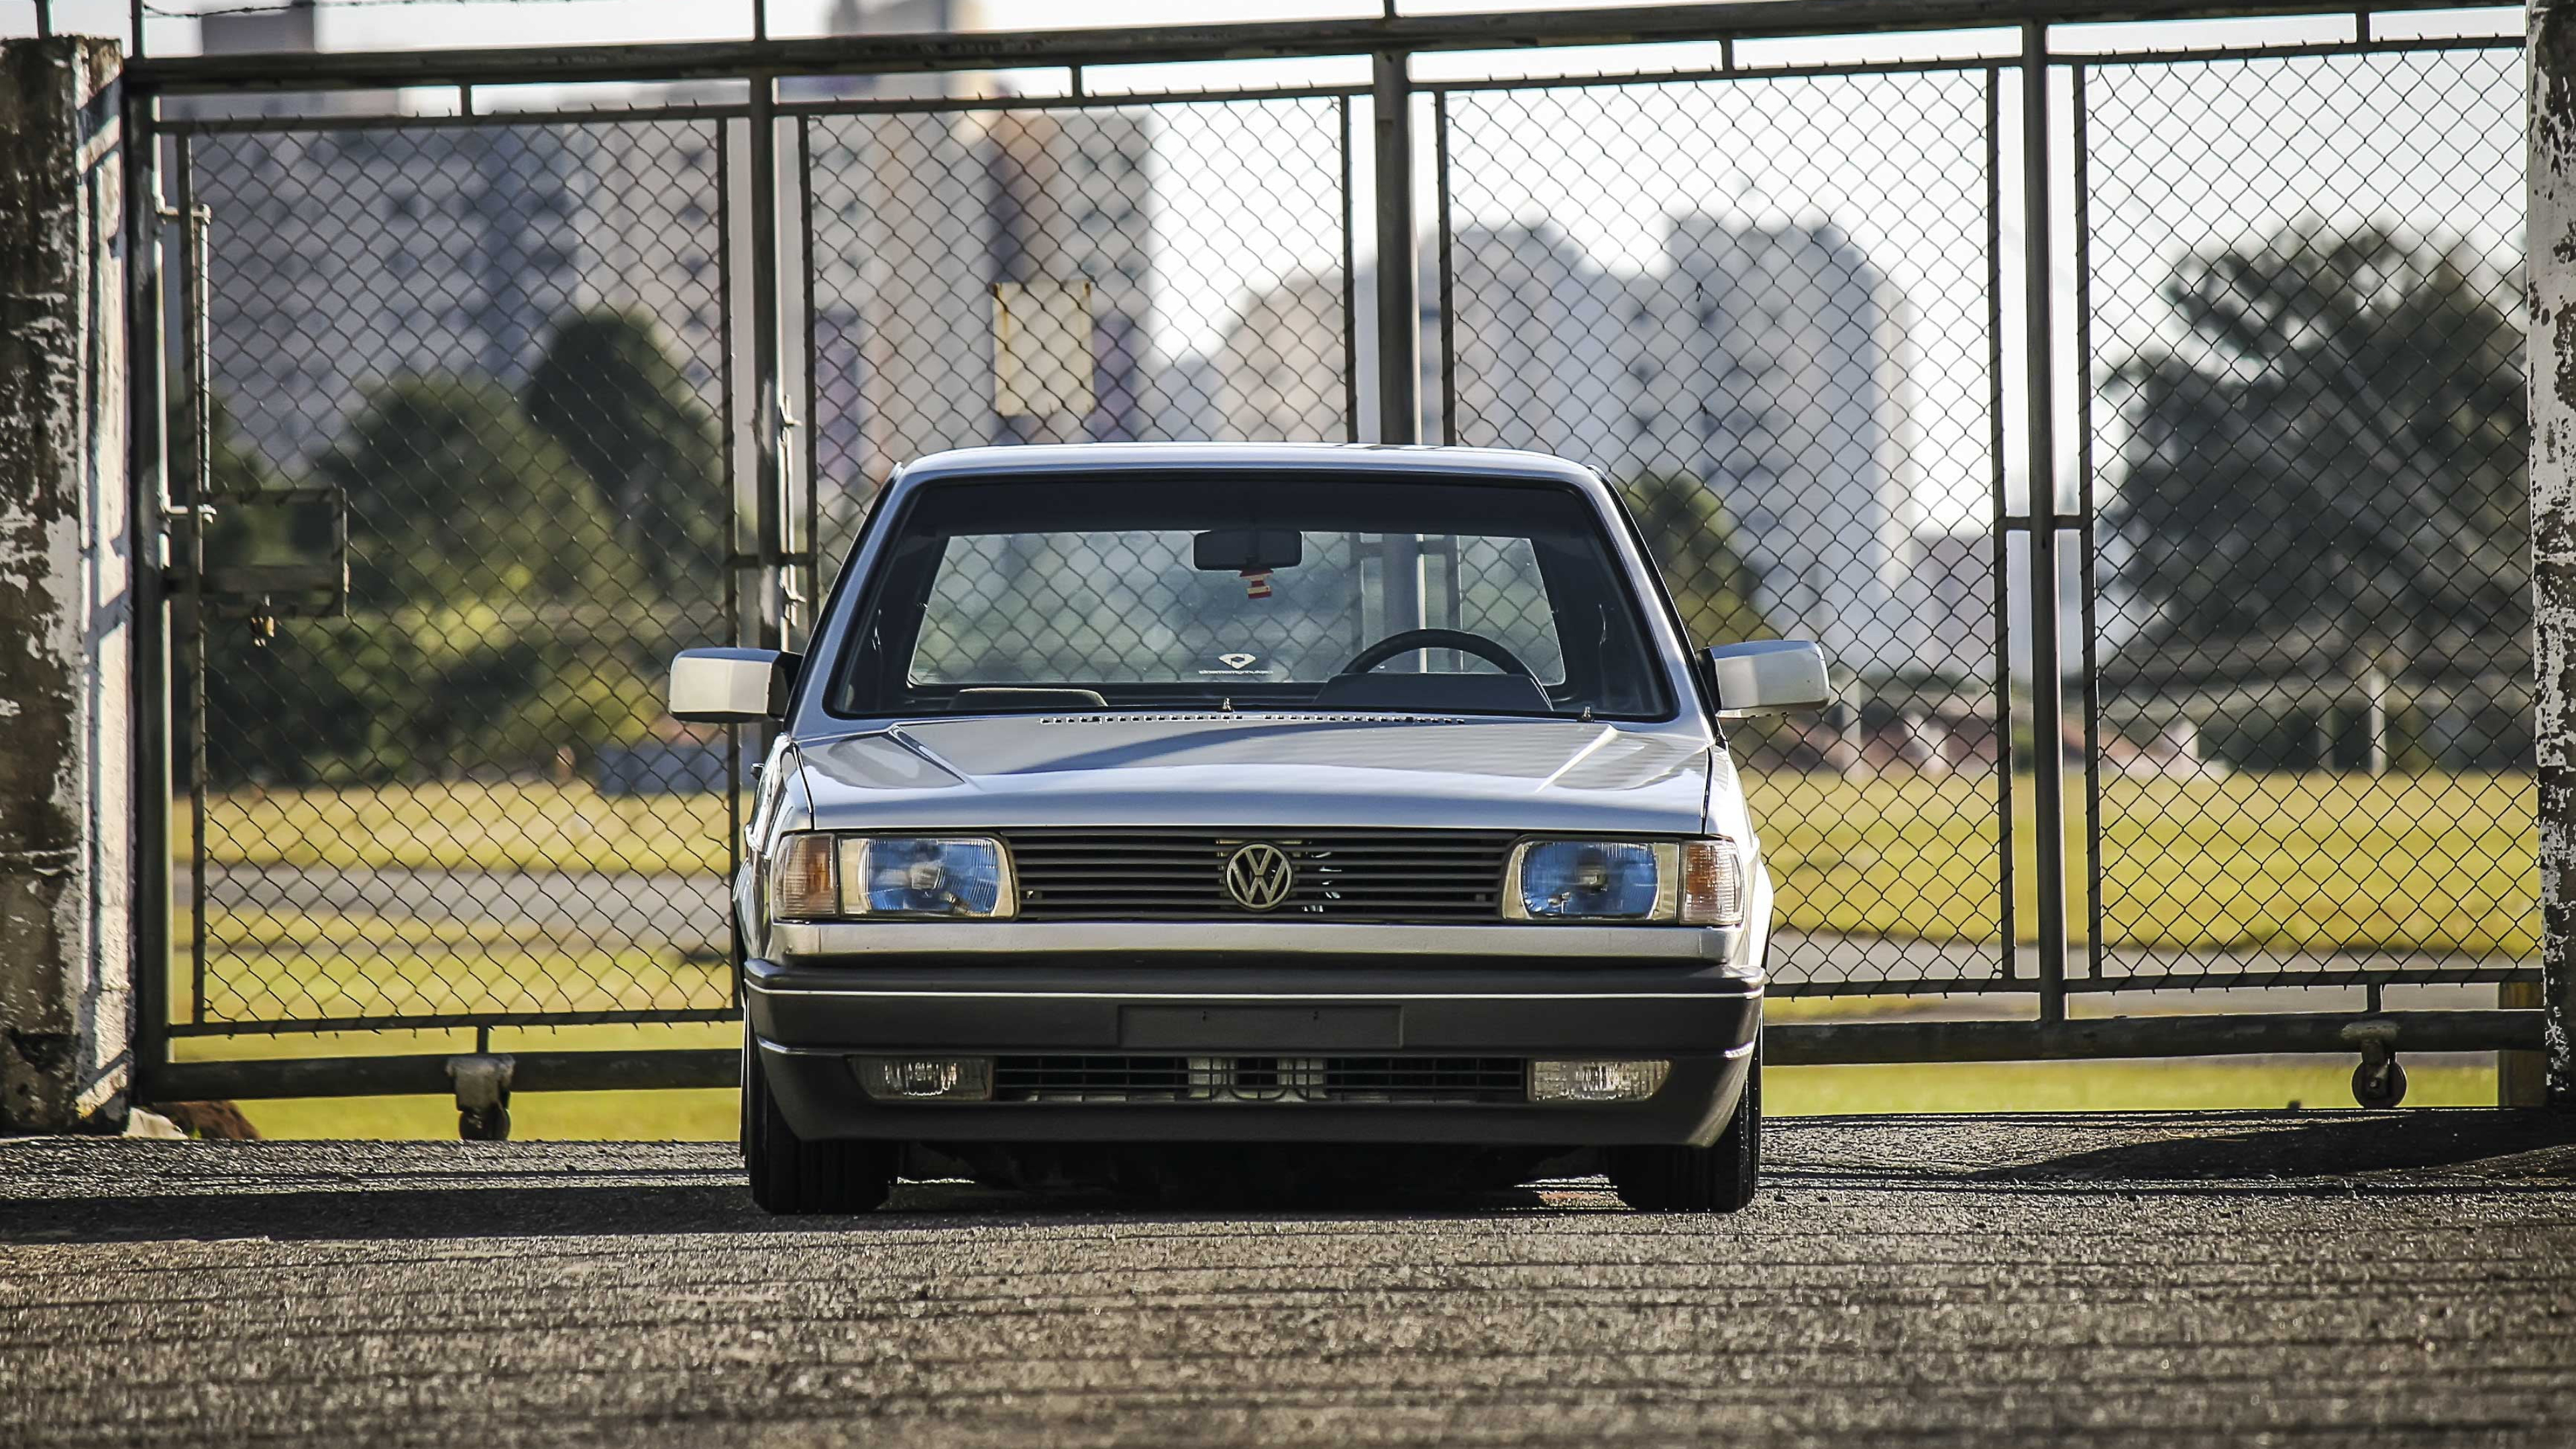 Papel de Parede do Volkswagen Gol